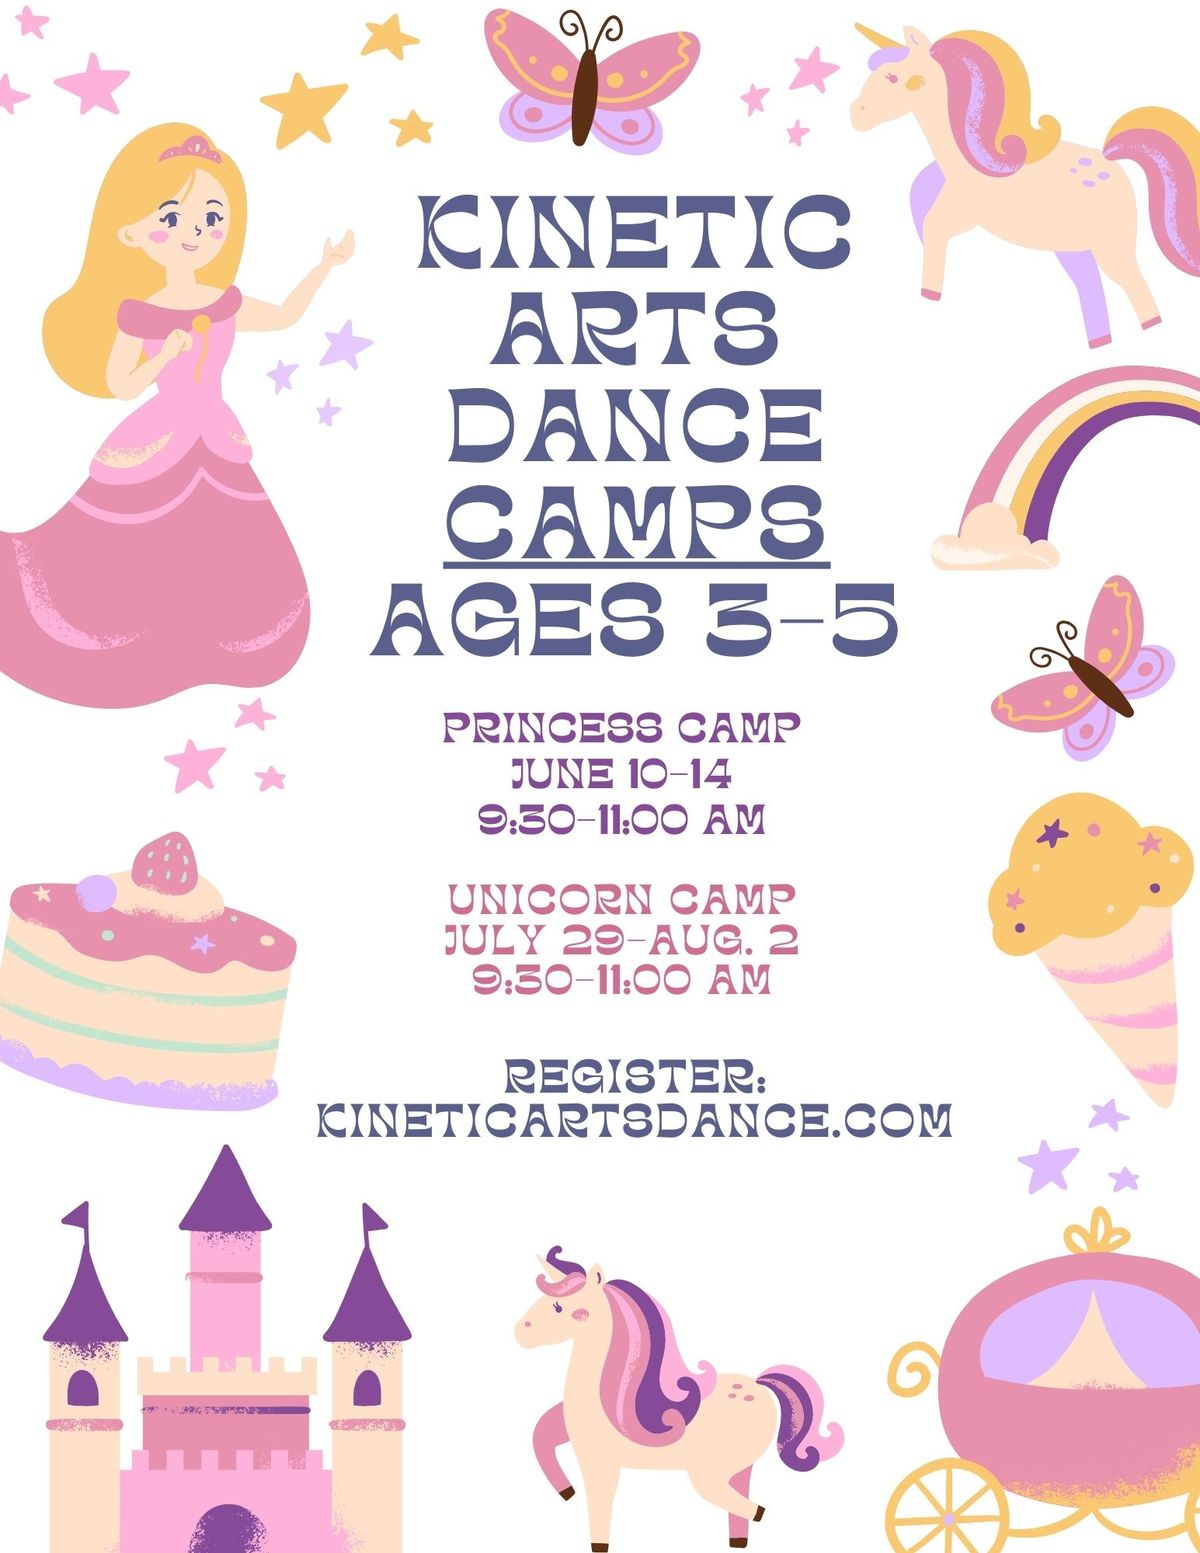 Princess Camp @ Kinetic Arts